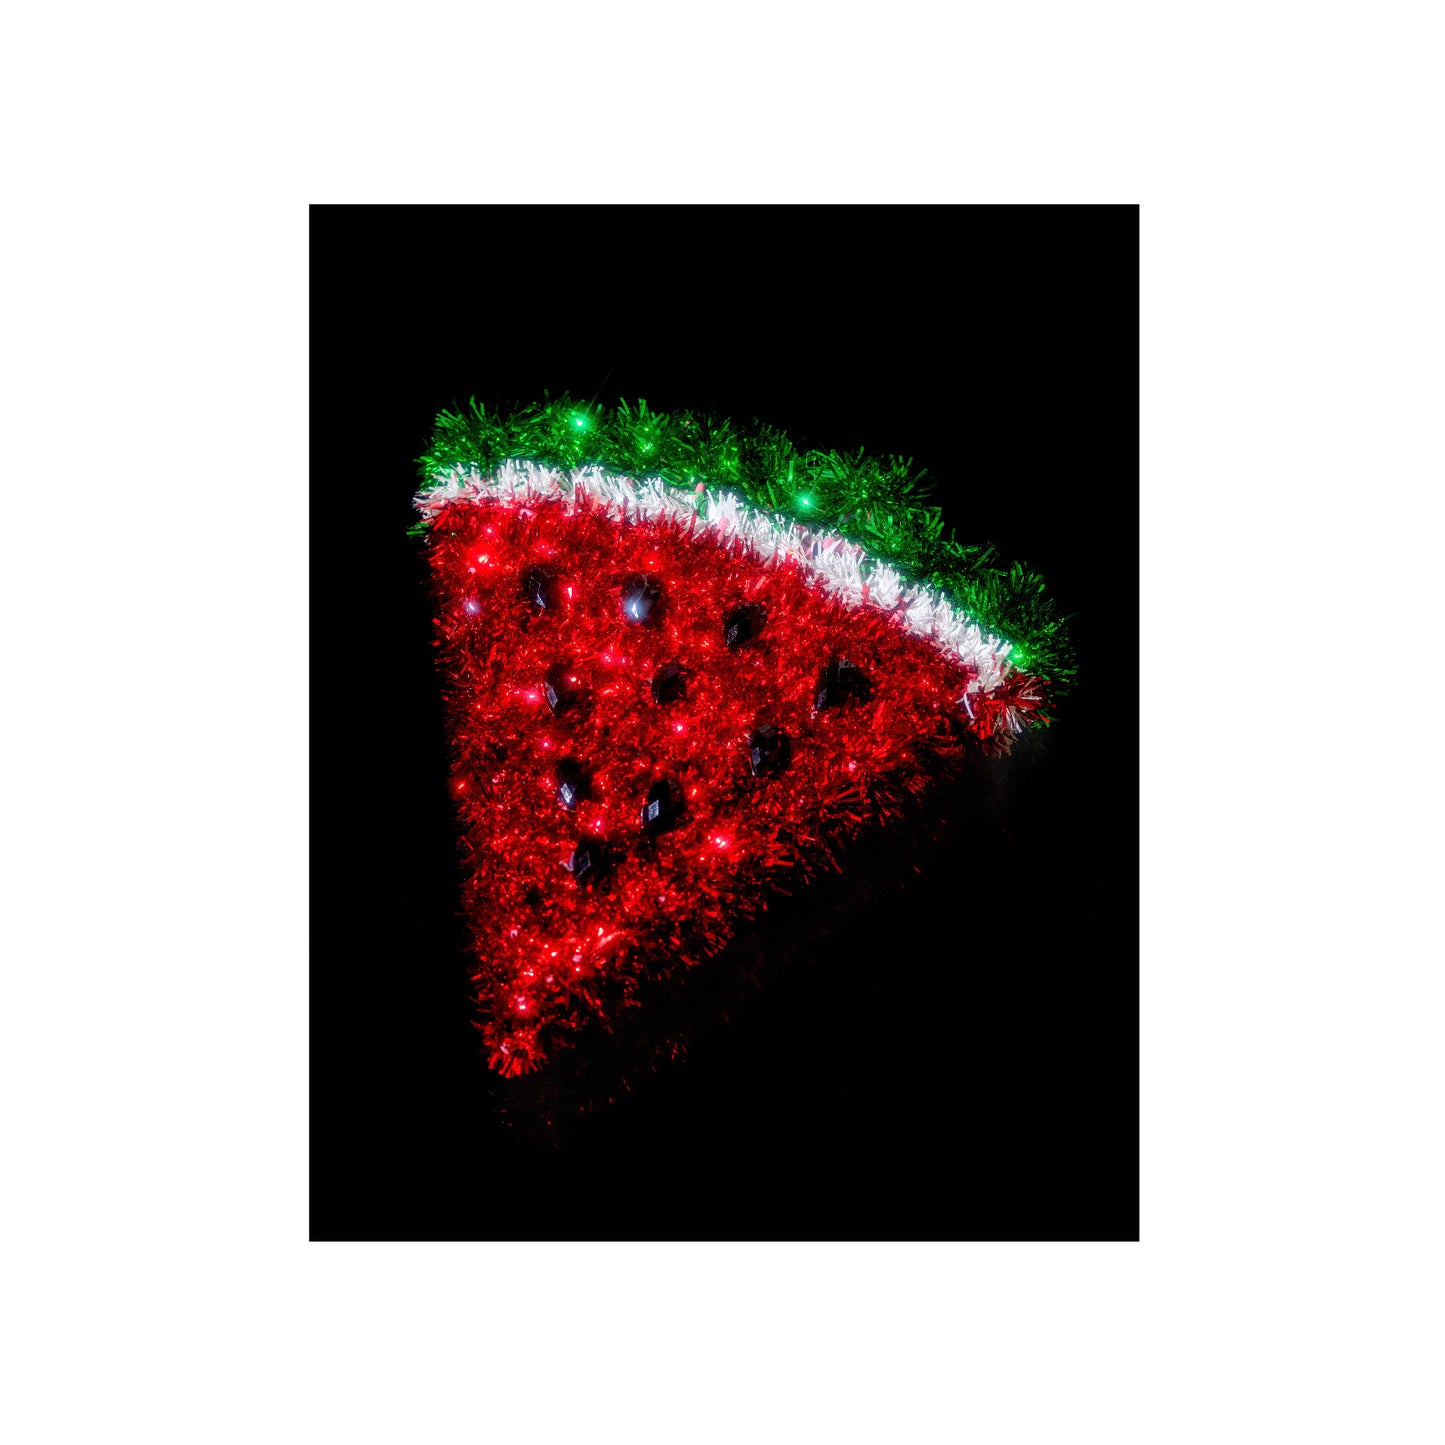 Watermelon Slice (01)